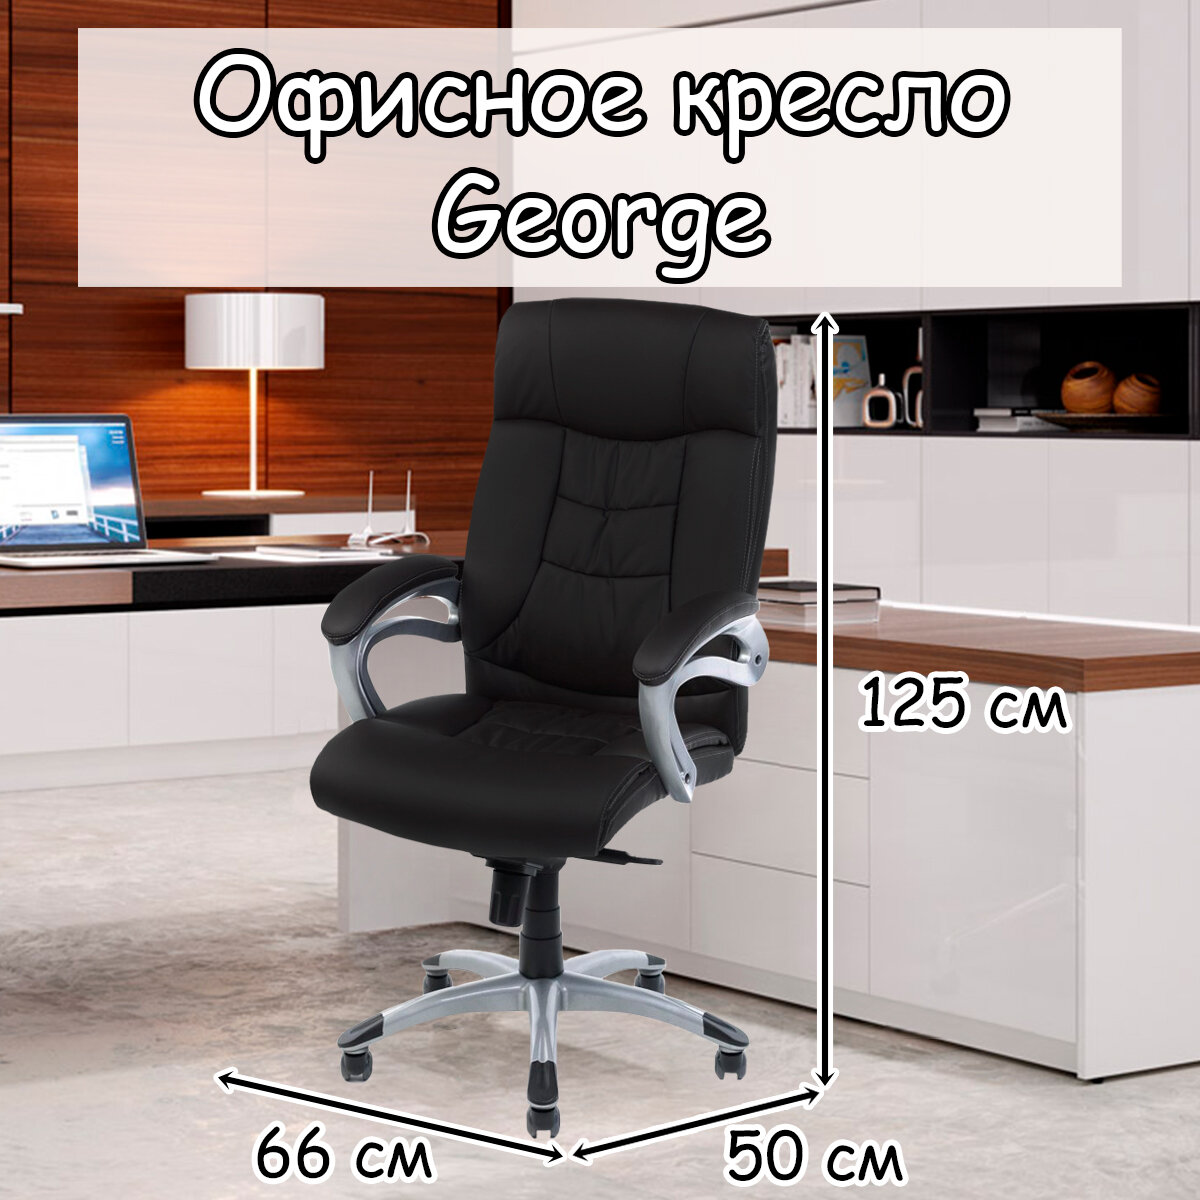 Офисное кресло George 125х66х50 см black кресло руководителя